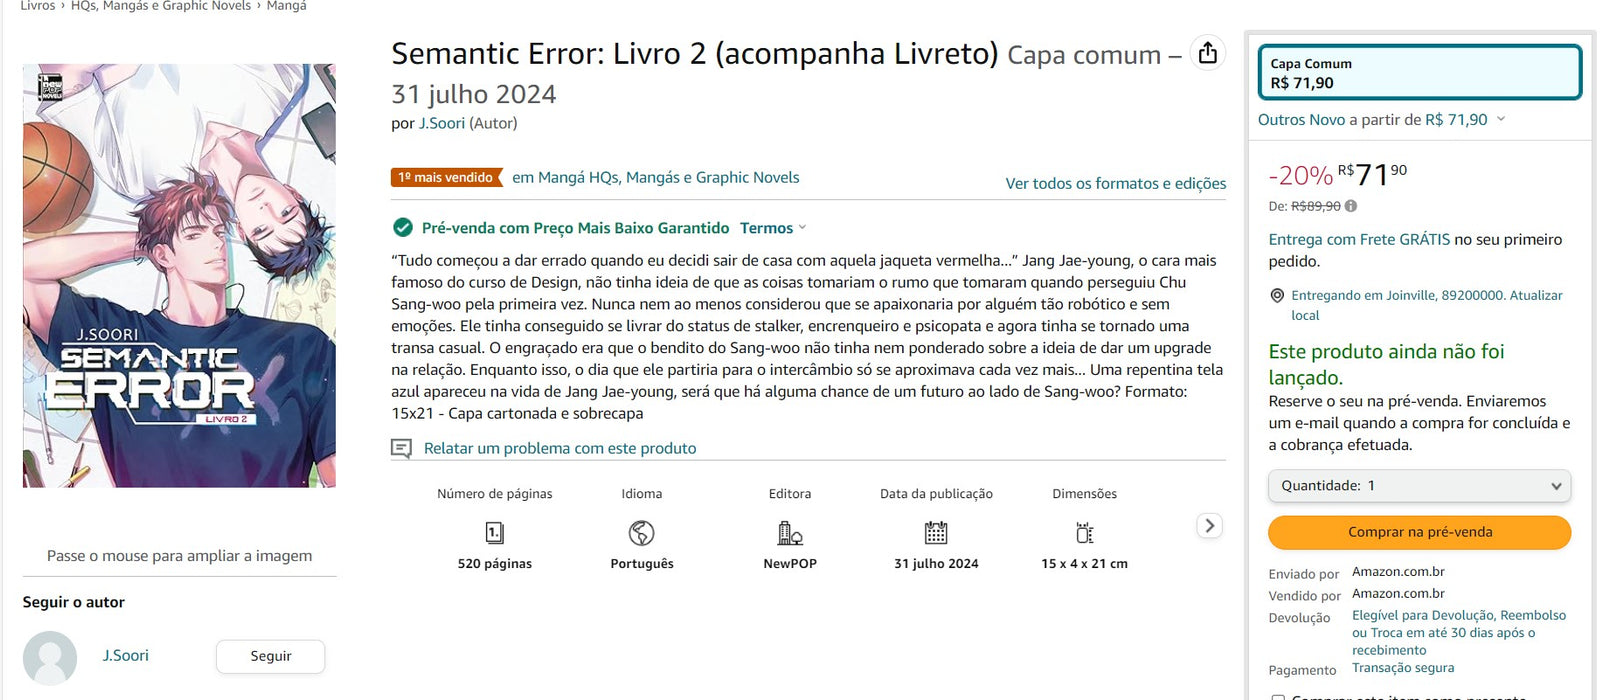 Personal Shopper | Buy from Brazil -Semantic Error: Livro 2 (acompanha Livreto)- 2 items-  DDP